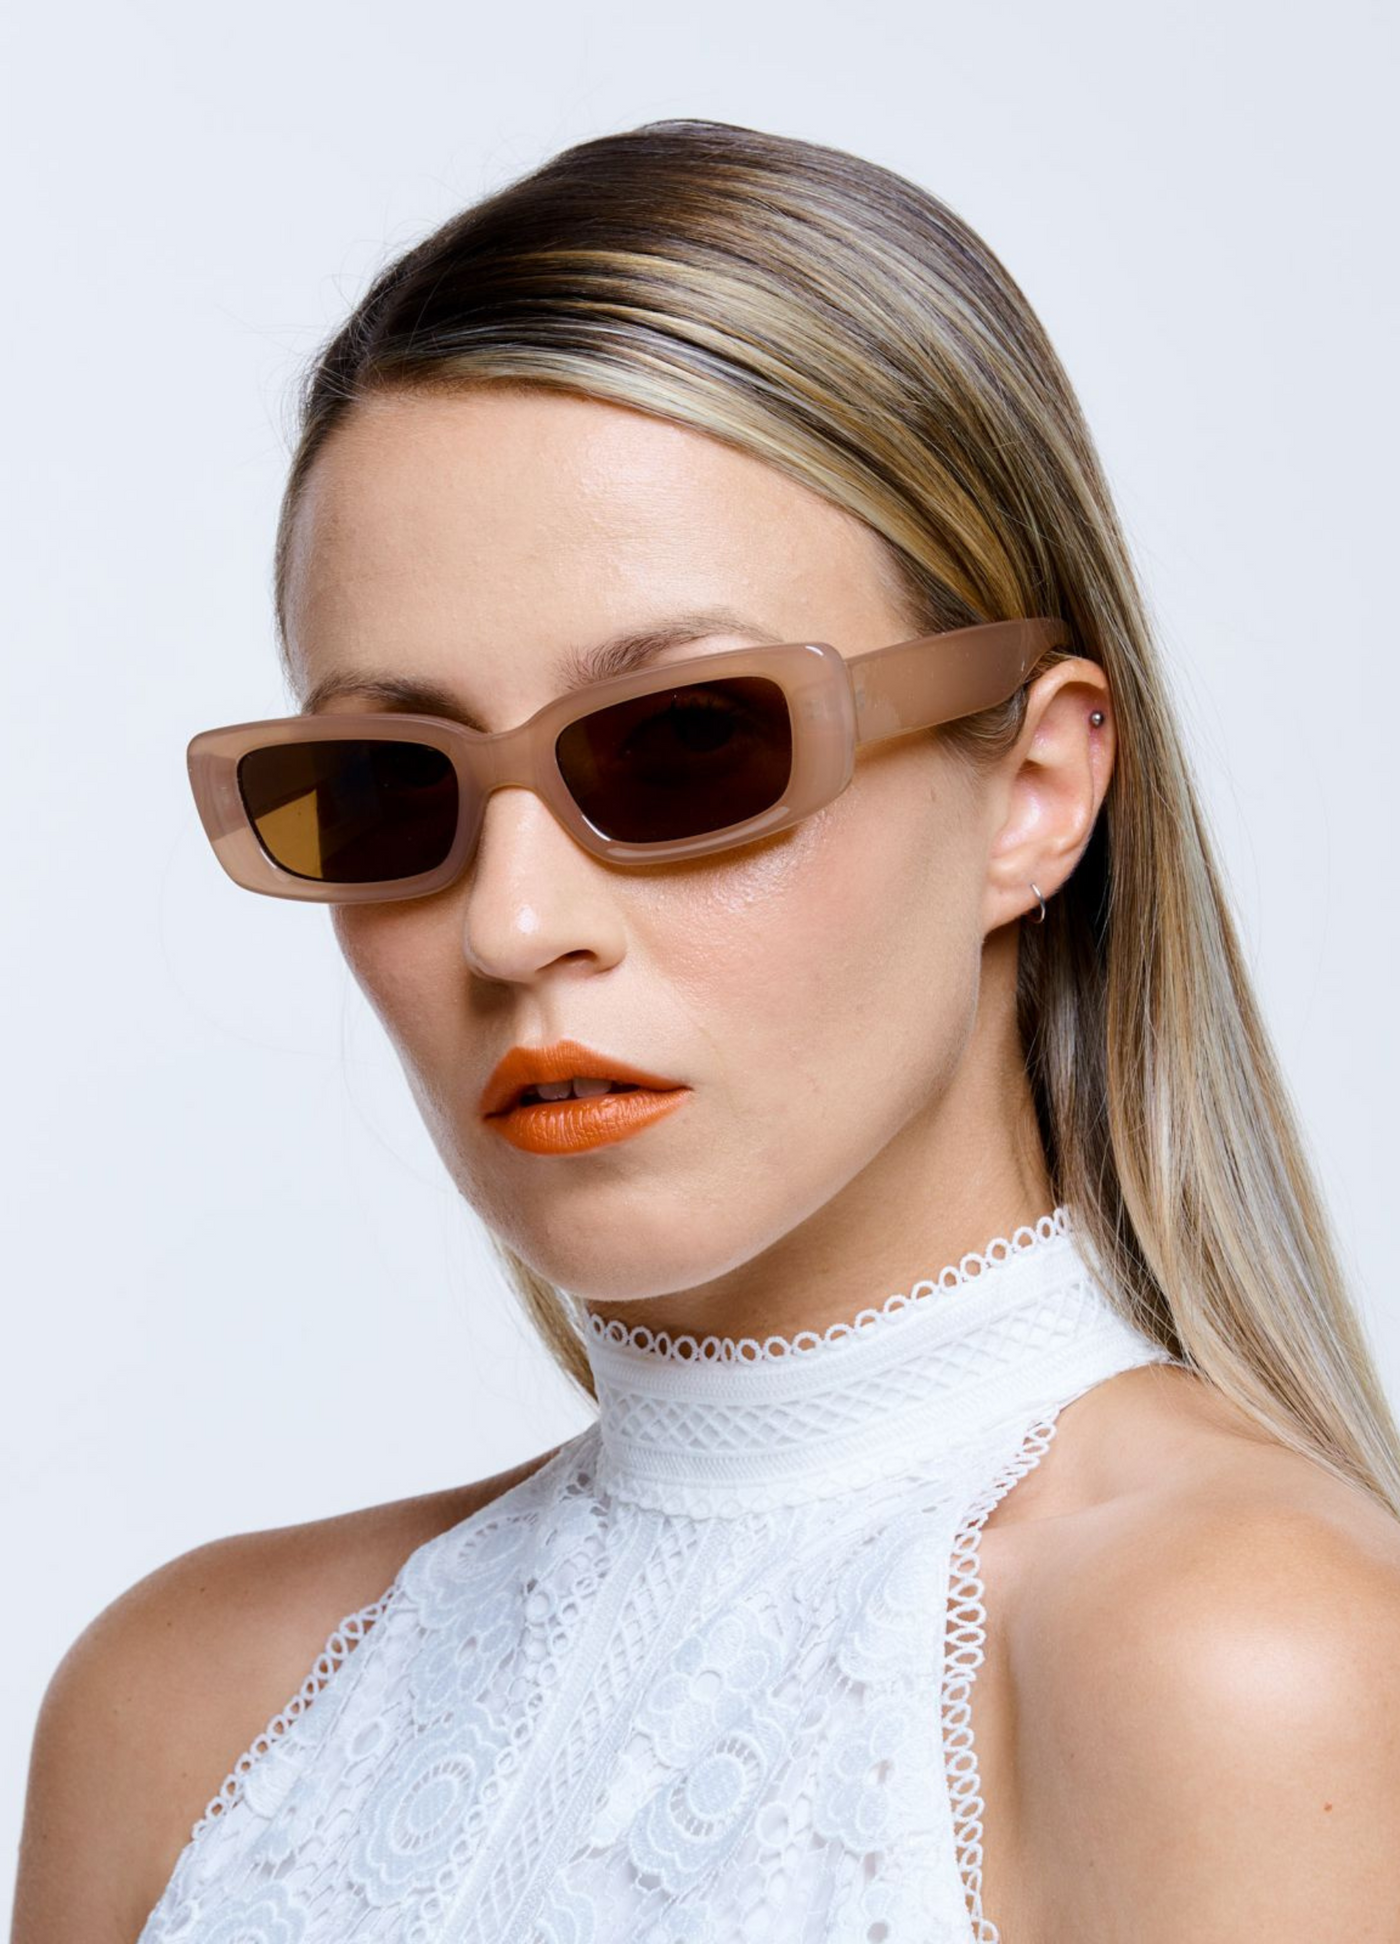 Model wearing nude reality sunglasses